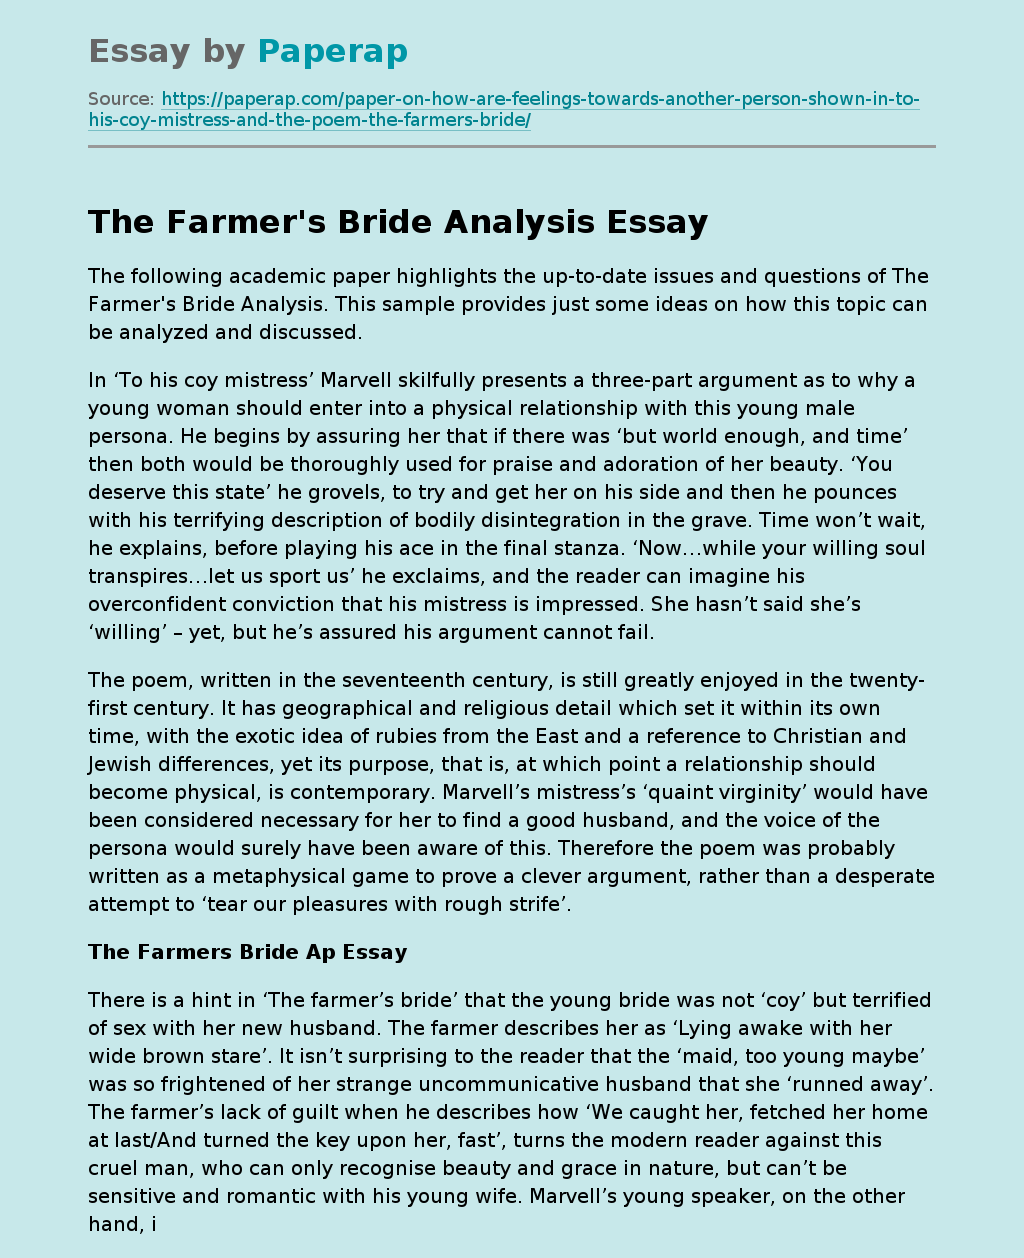 The Farmer's Bride Analysis